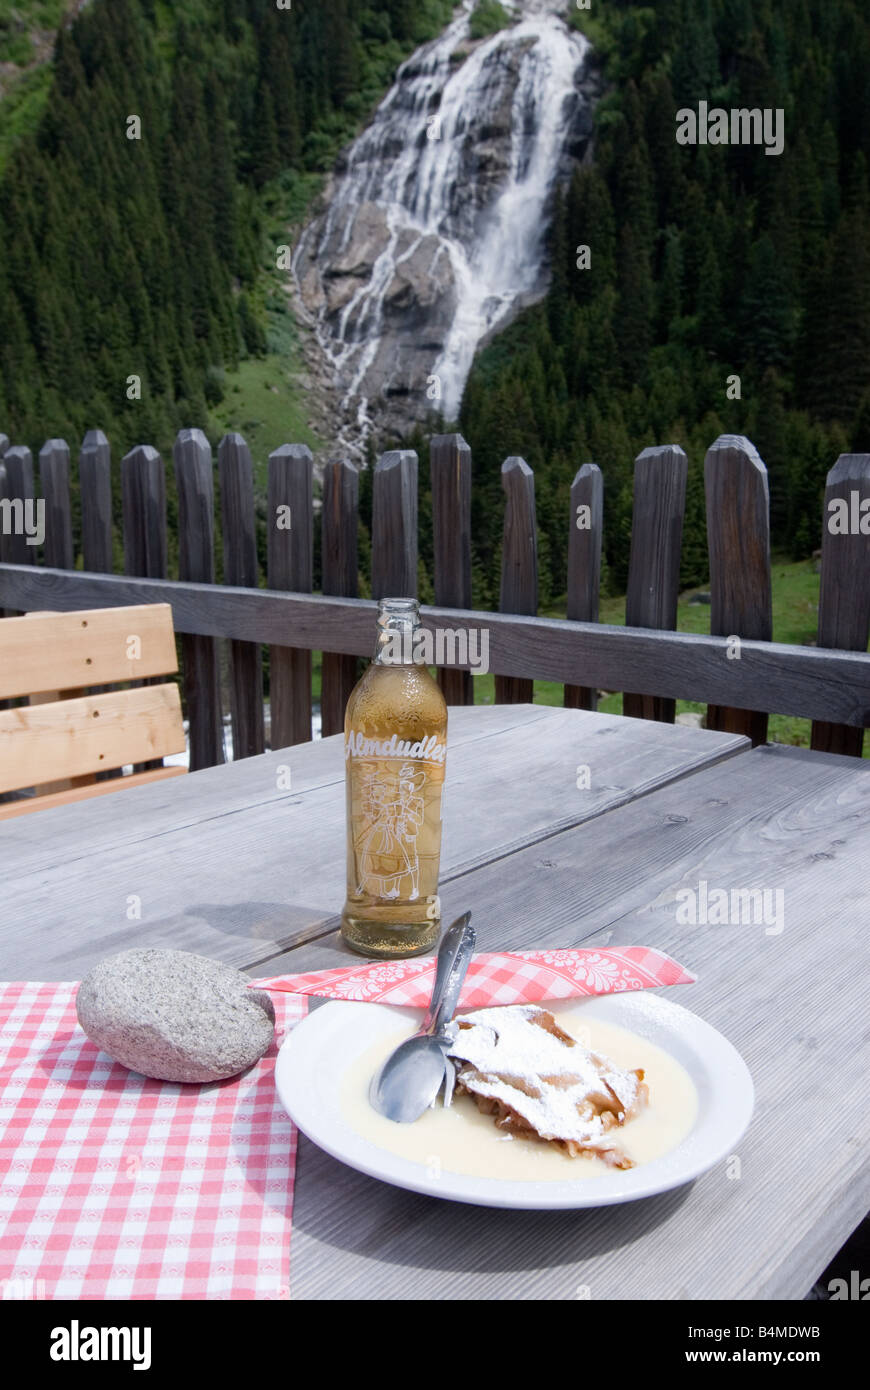 Apple strudel with vanilla sauce and Almdudler lemonade at Grawa Waterfall in Stubaital Valley Tyrol Austria Stock Photo